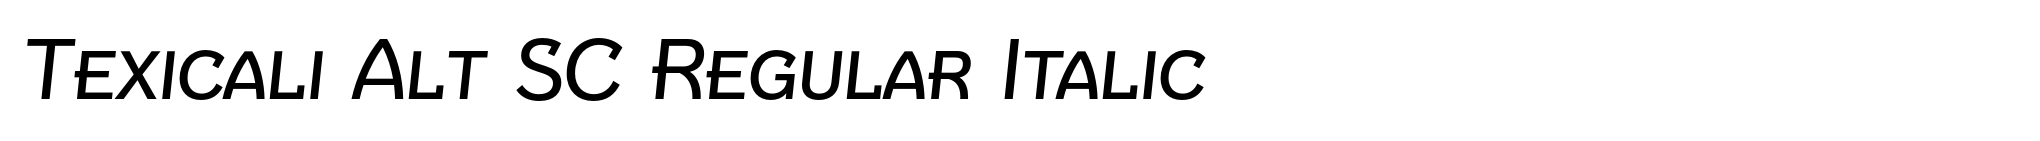 Texicali Alt SC Regular Italic image